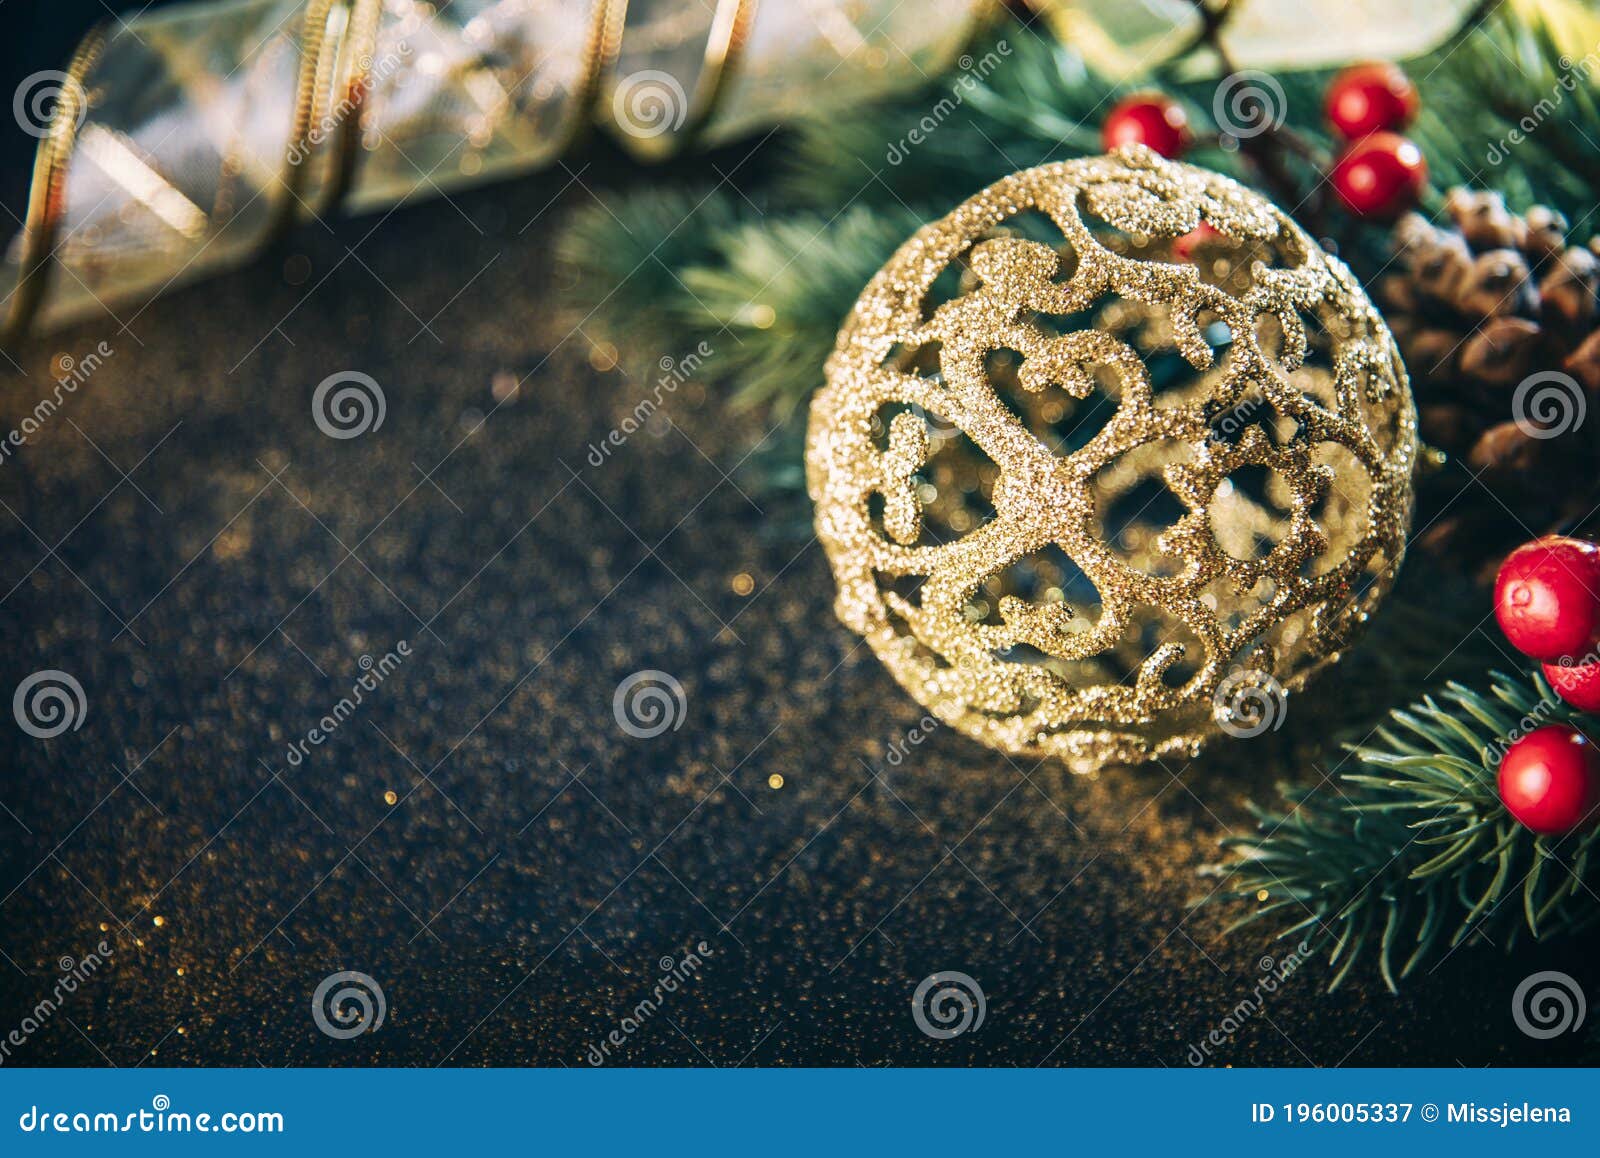 Christmas Luxury Still Life with Golden Christmas Ornament, Fir ...